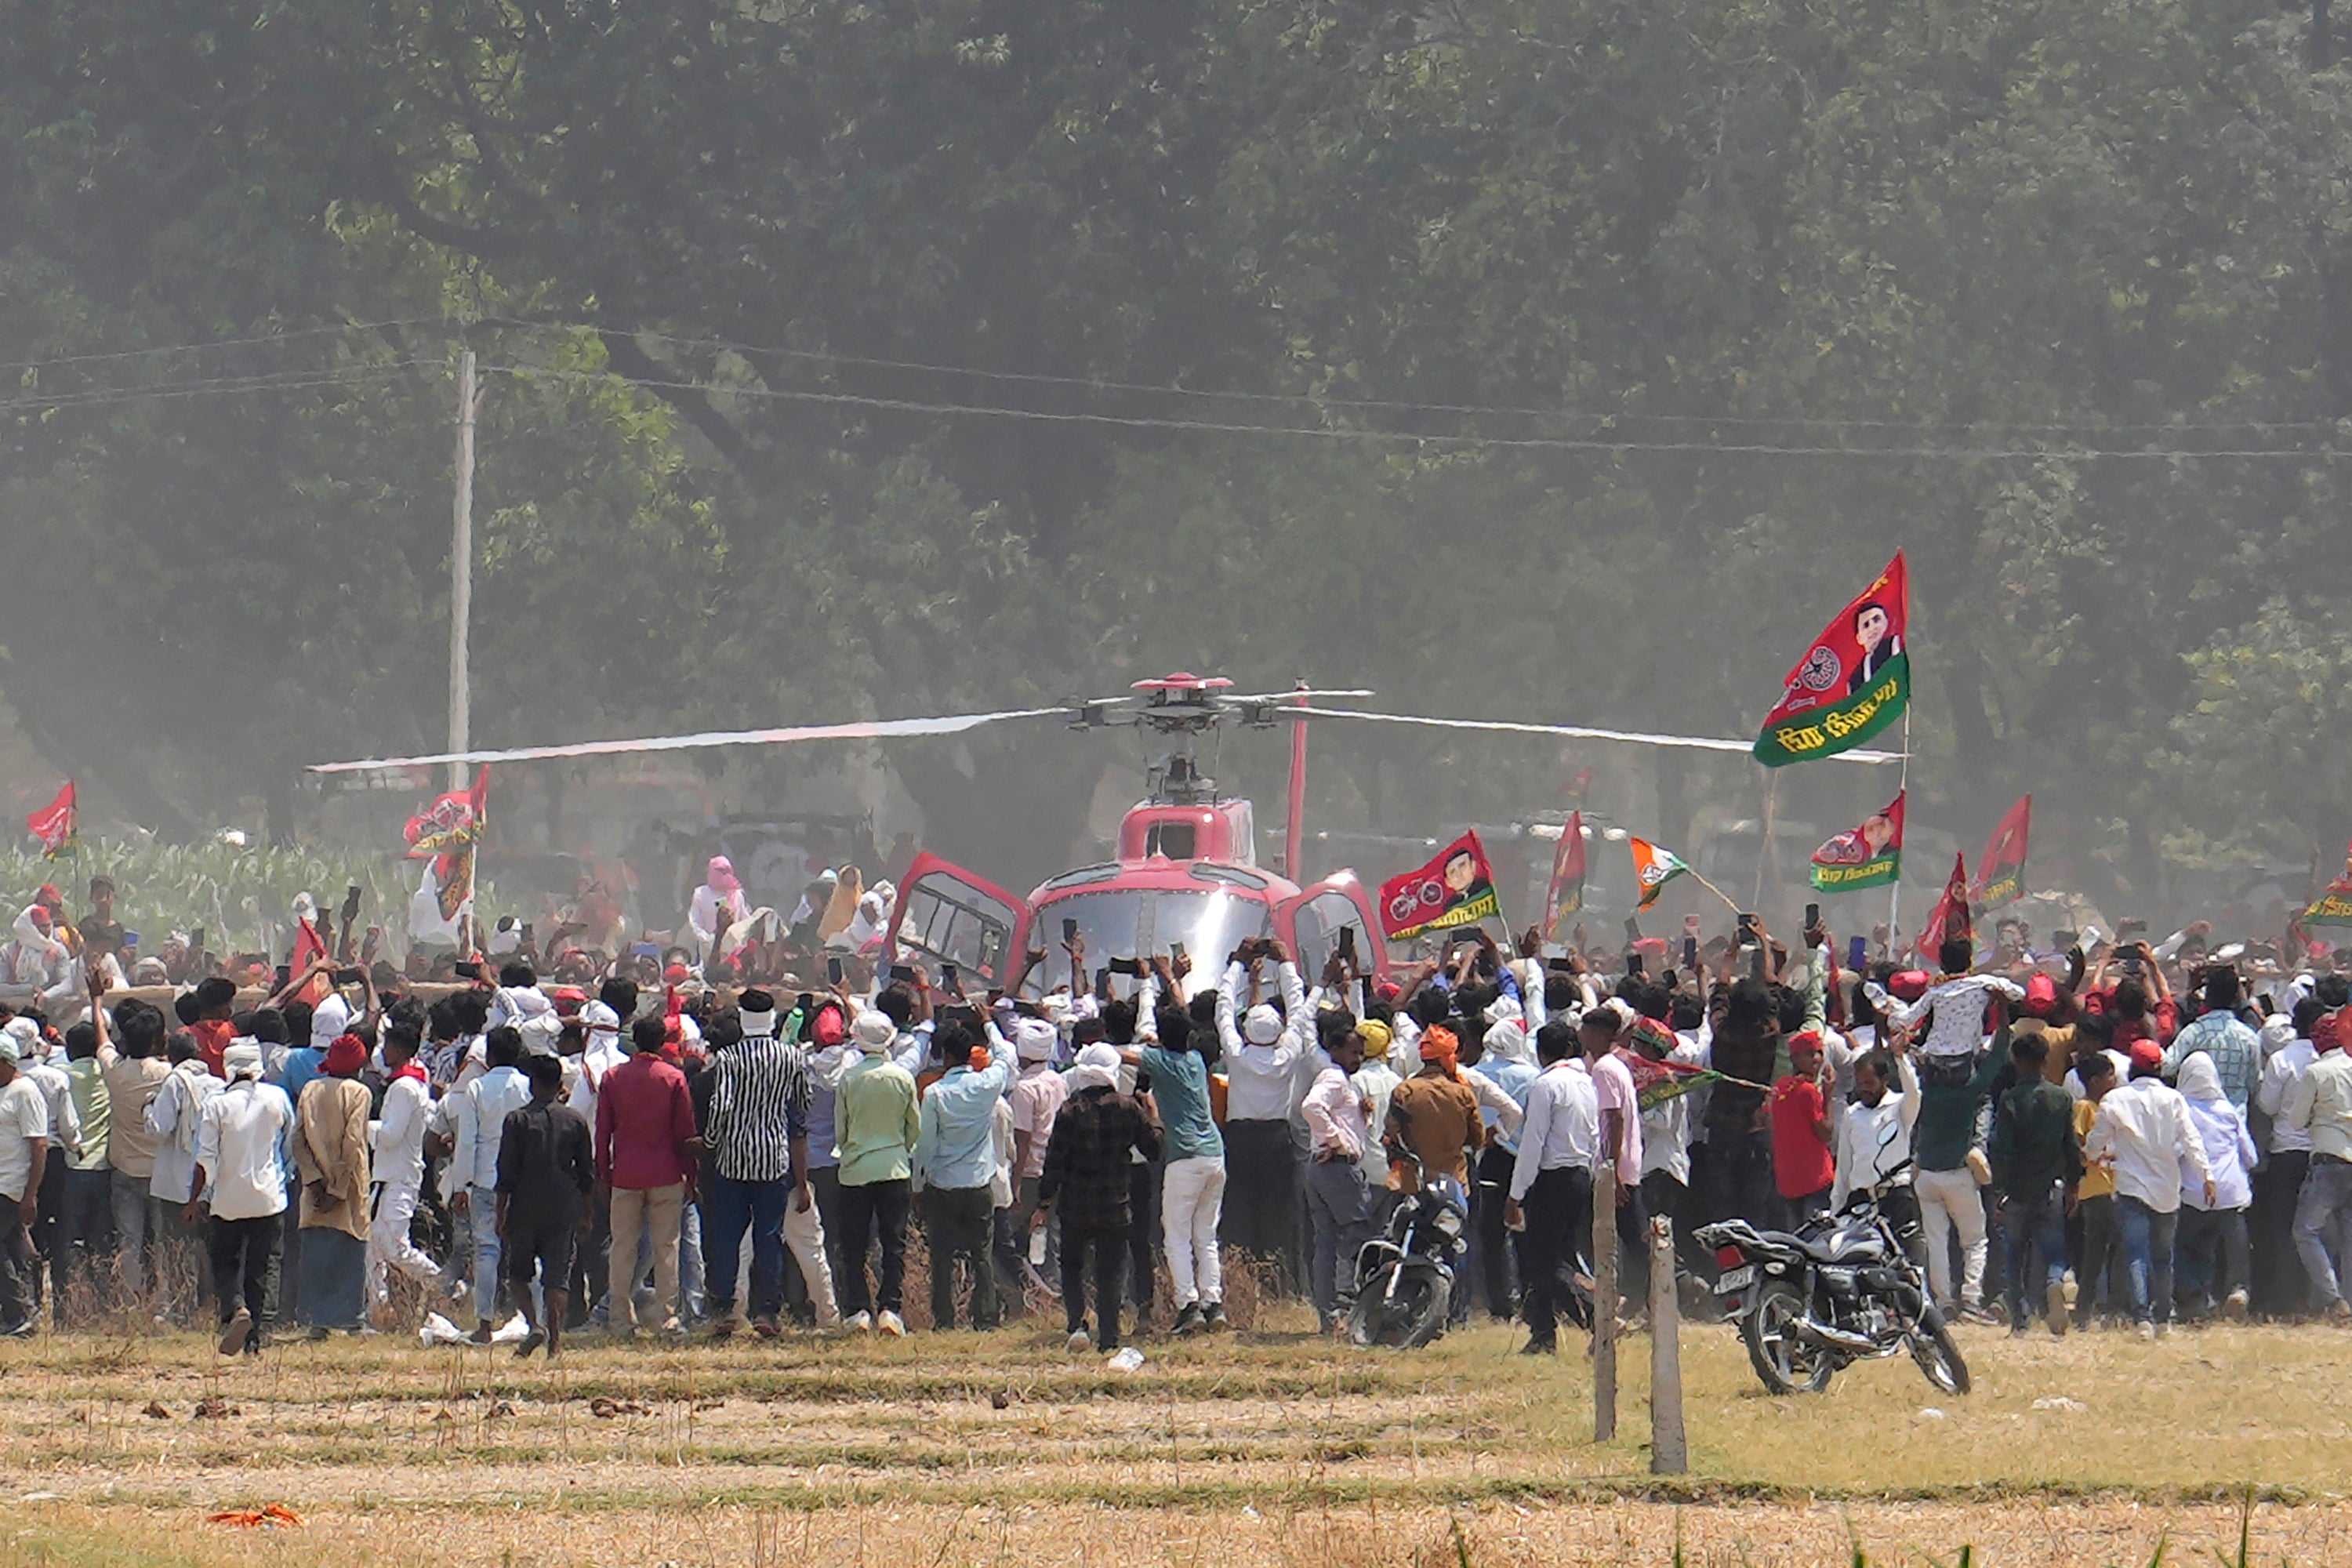 Samajwadi Party’s supporters rush towards a helicopter bringing party leader Akhilesh Yadav to an election rally in Prayagraj, Uttar Pradesh, on 19 May 2024